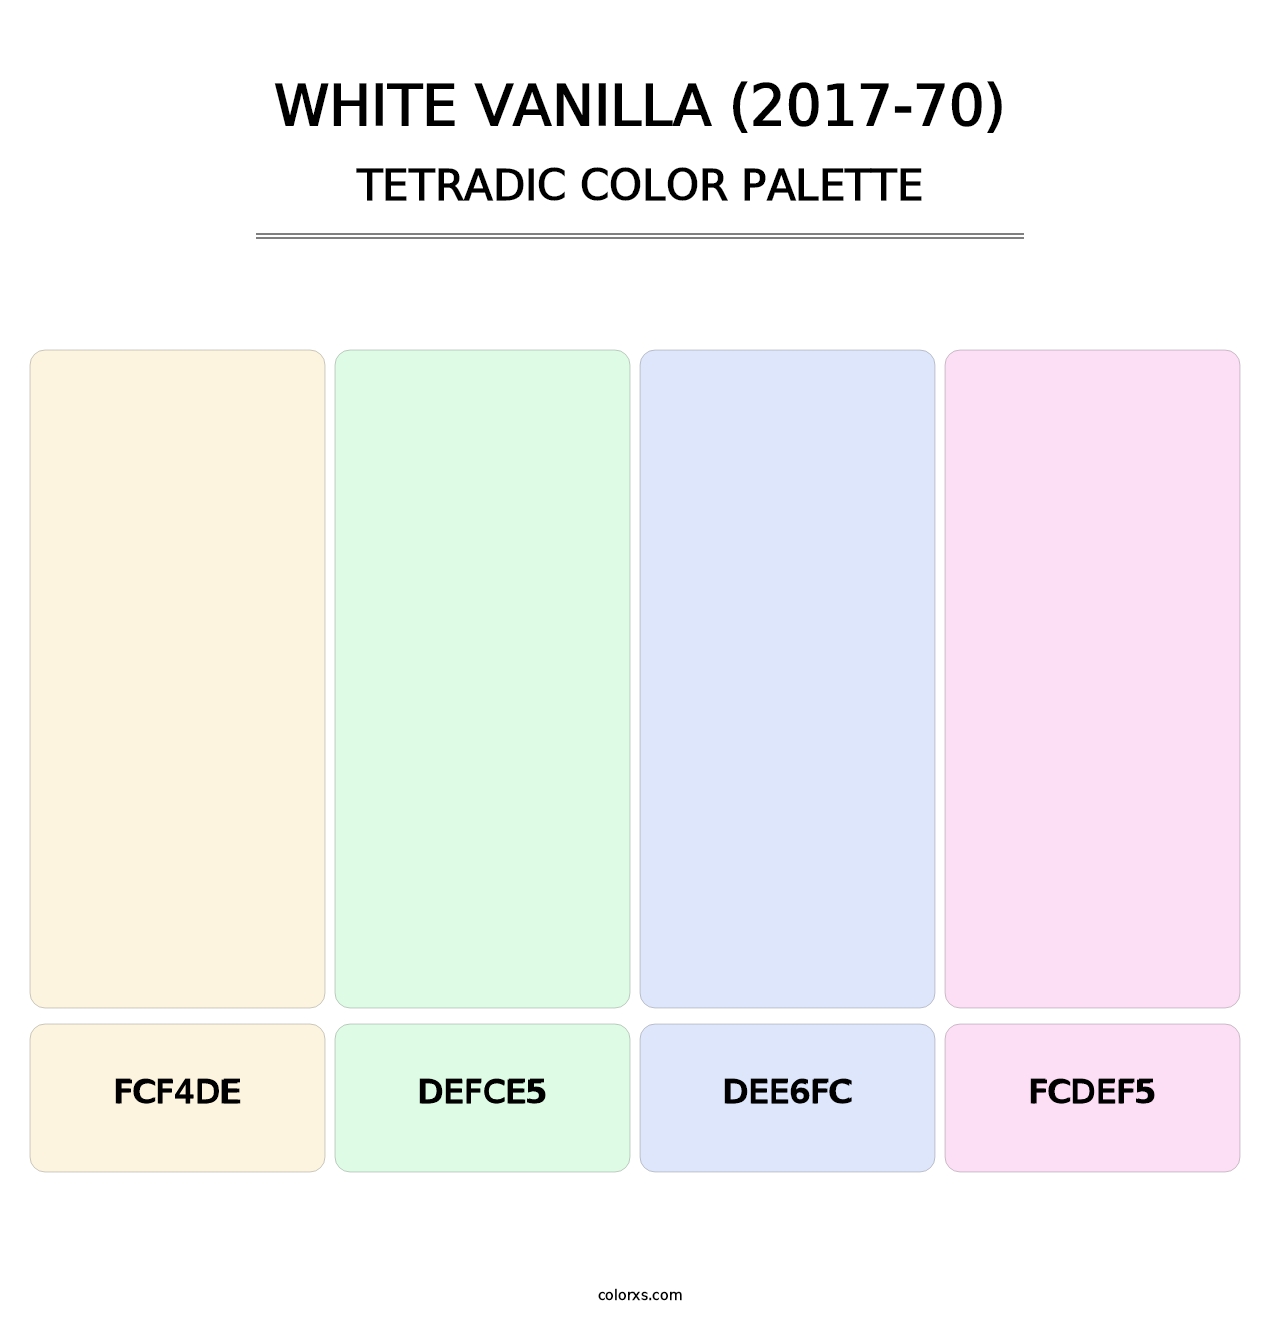 White Vanilla (2017-70) - Tetradic Color Palette